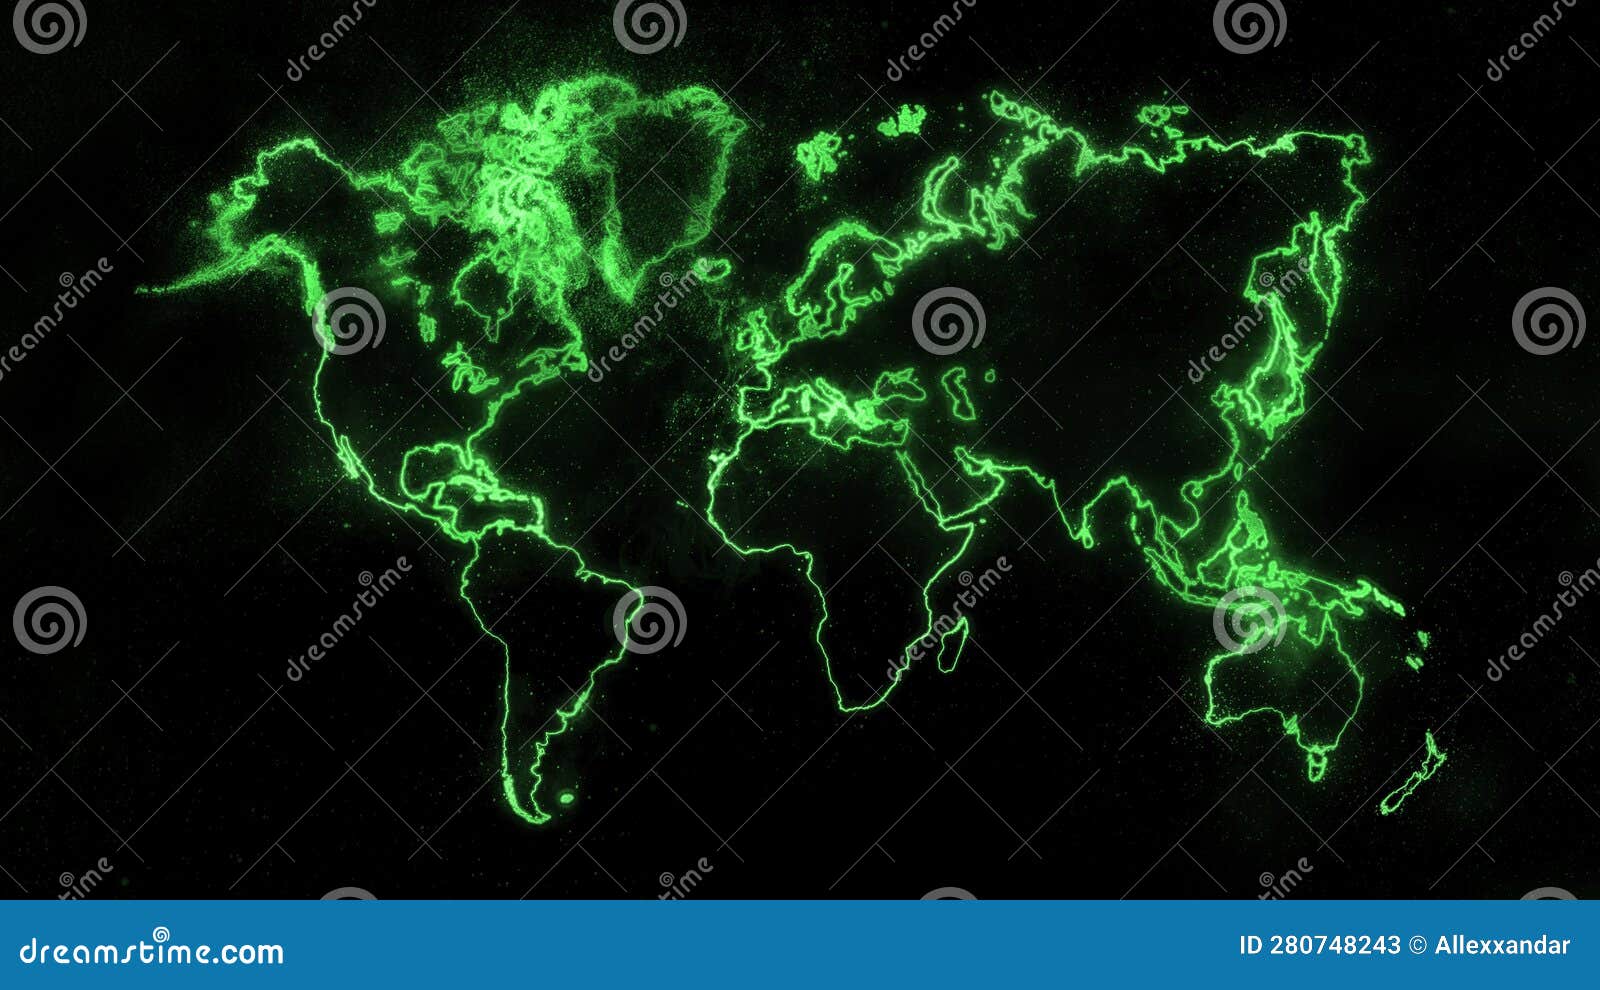 colorful worldÃÂ mapÃÂ on dark background, greenÃÂ glowing world map